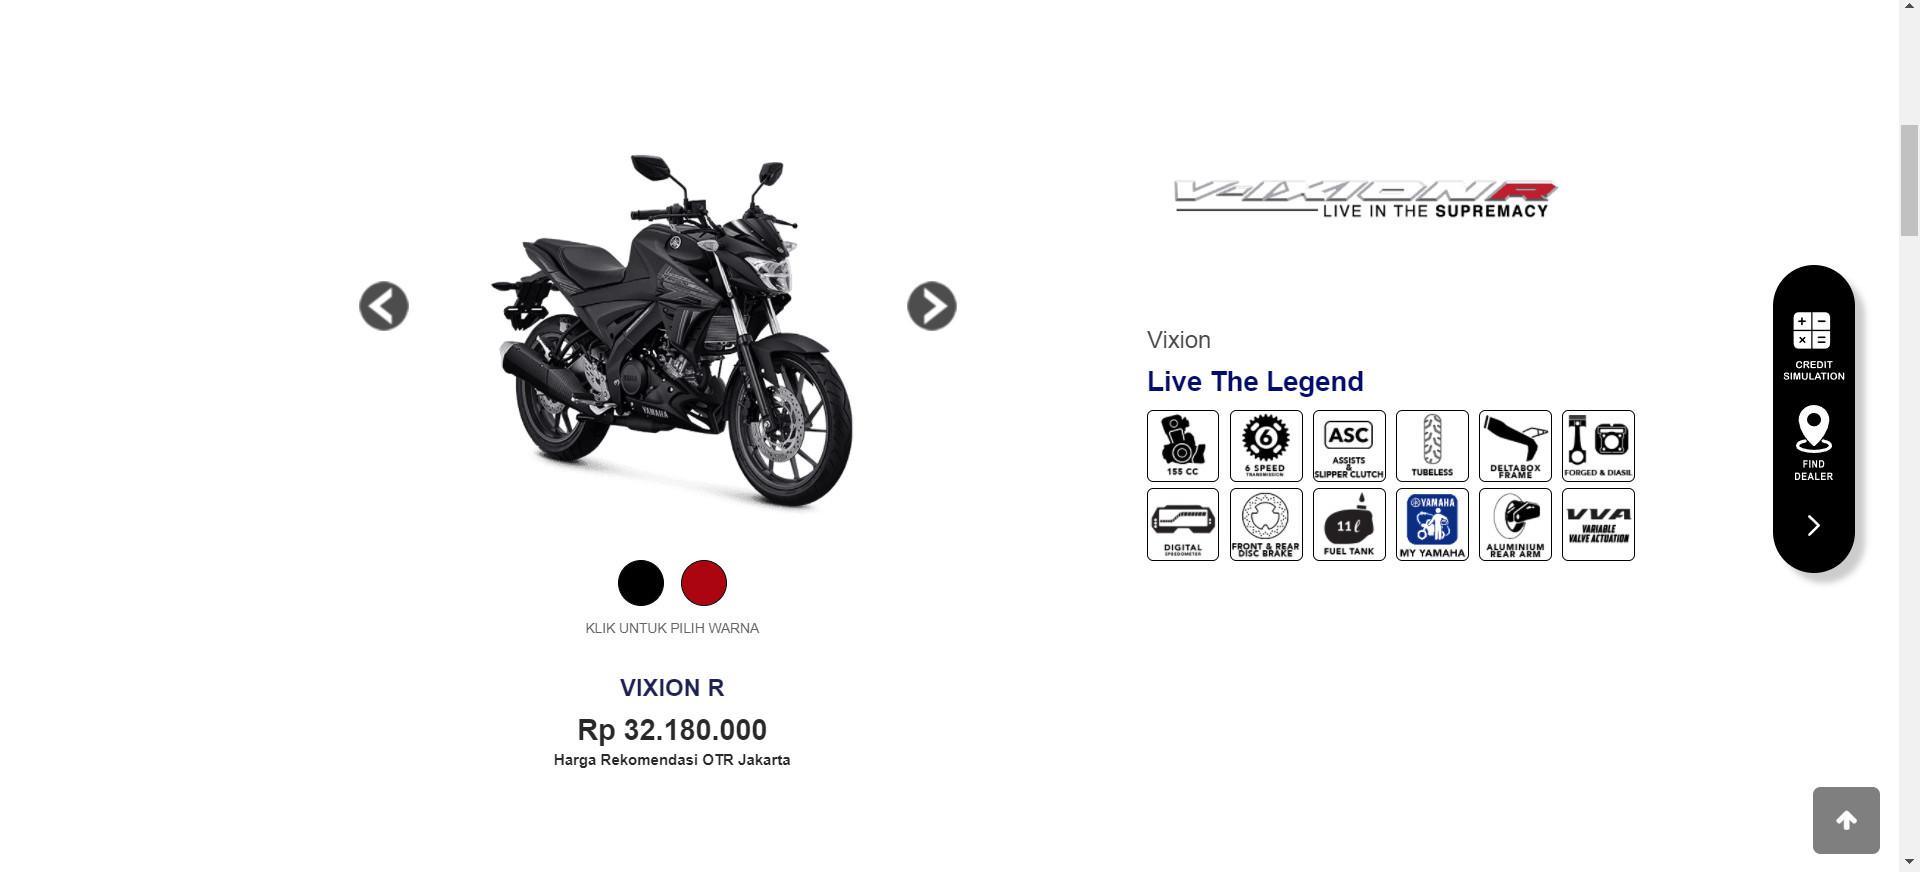 Jika masuk ke laman Vixion biasa, Yamaha Vixion R ternyata ditemukan (YIMM)